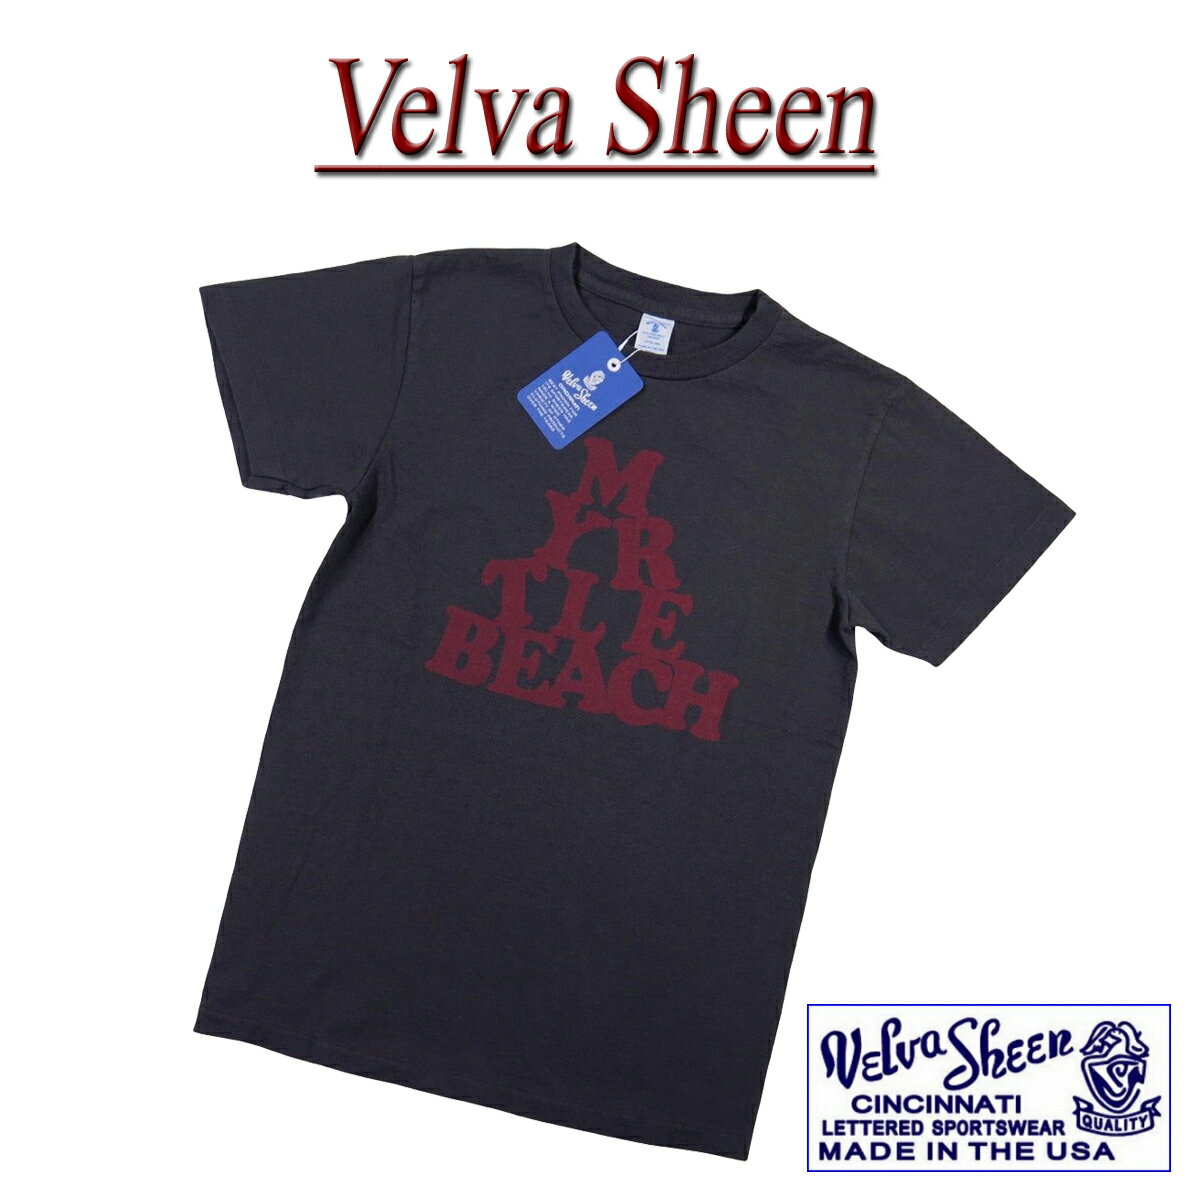  jd591 新品 Velva Sheen USA製 半袖 MYRTLE BEACH TEE Tシャツ 162037 ベルバシーン メンズ ブルーレーベル ティーシャツ Made in USA 